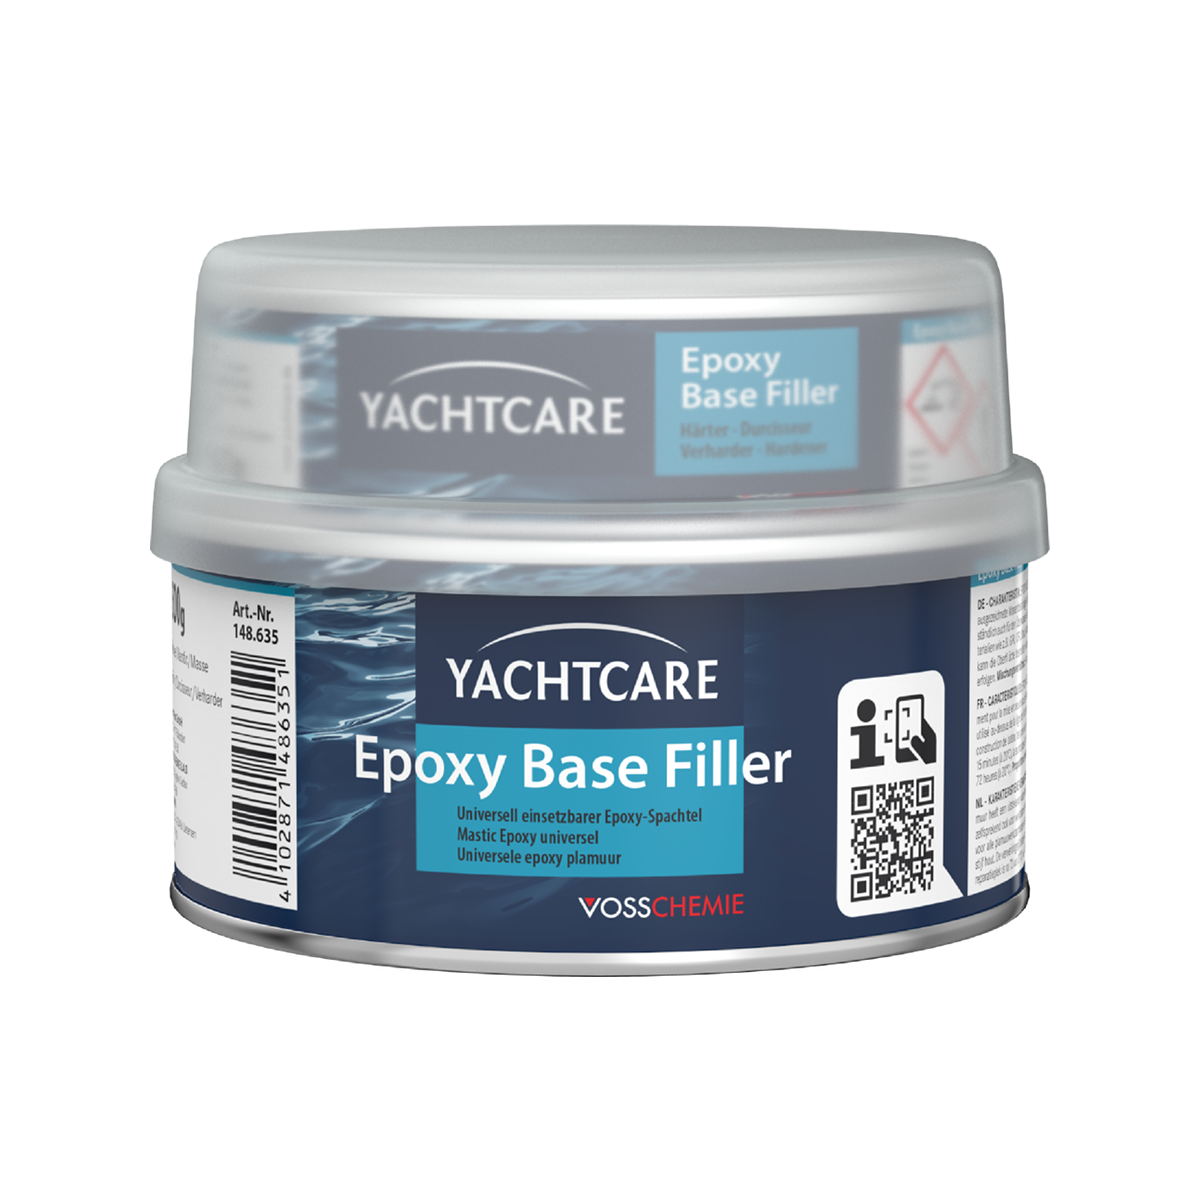 Yachtcare Epoxy Base Filler mastic gris clair - 2000g